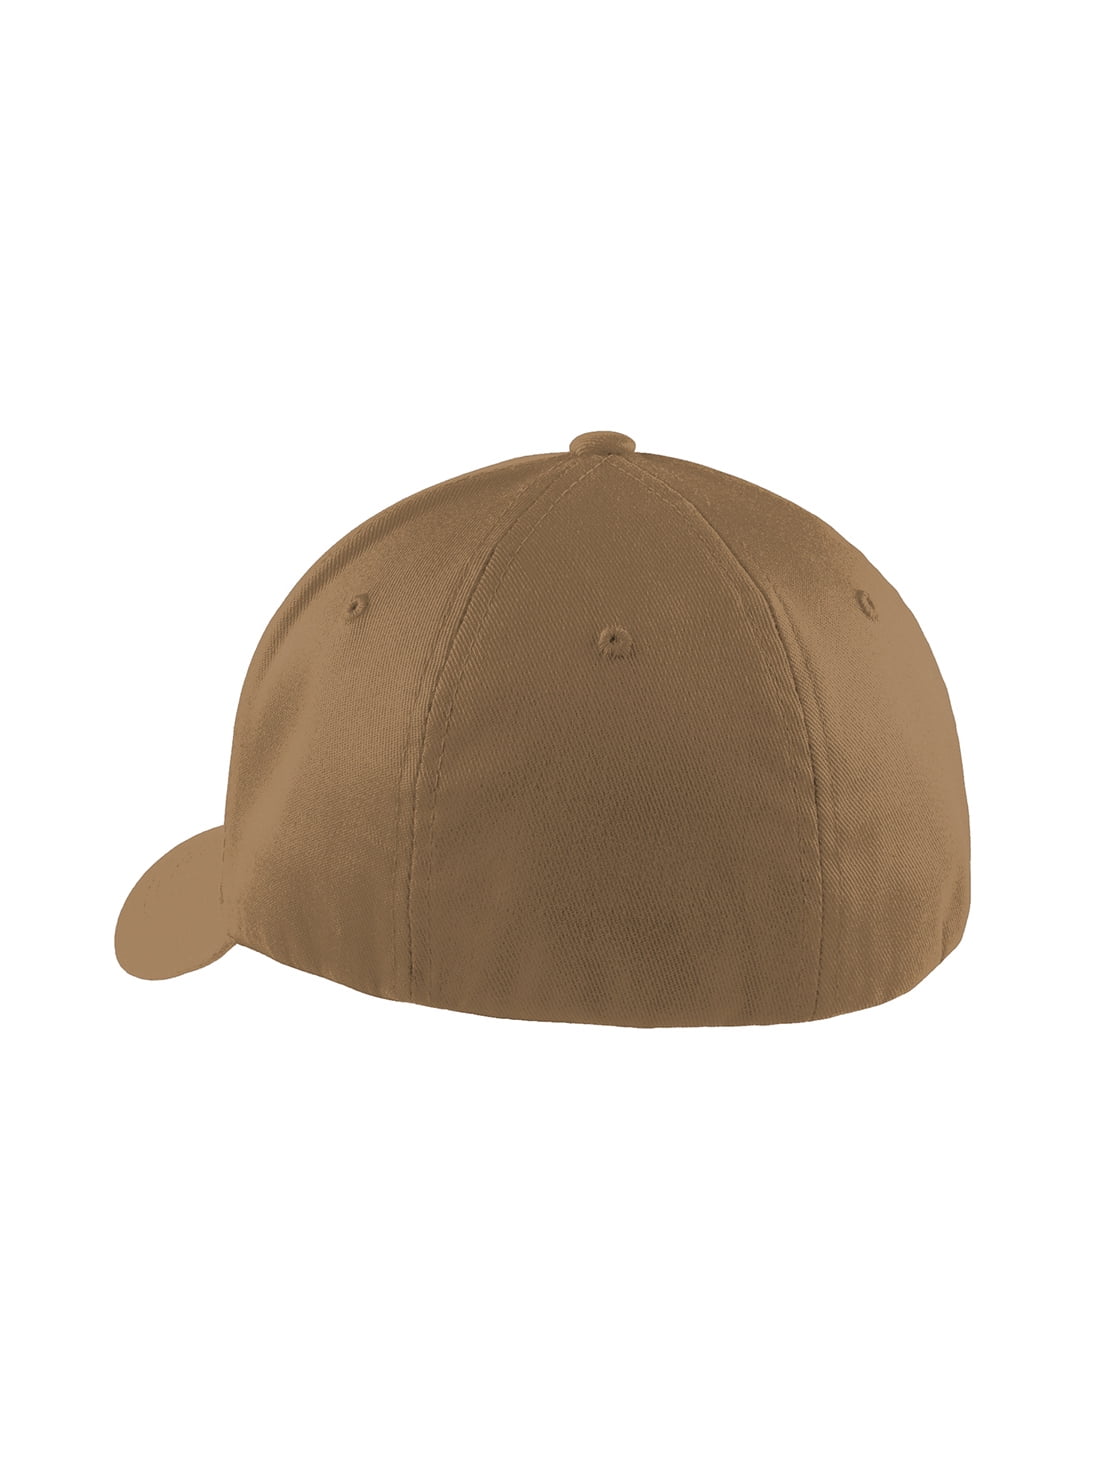 Woodland Fit Brown - - Top Large/X-Large Headwear Flex Baseball Cap